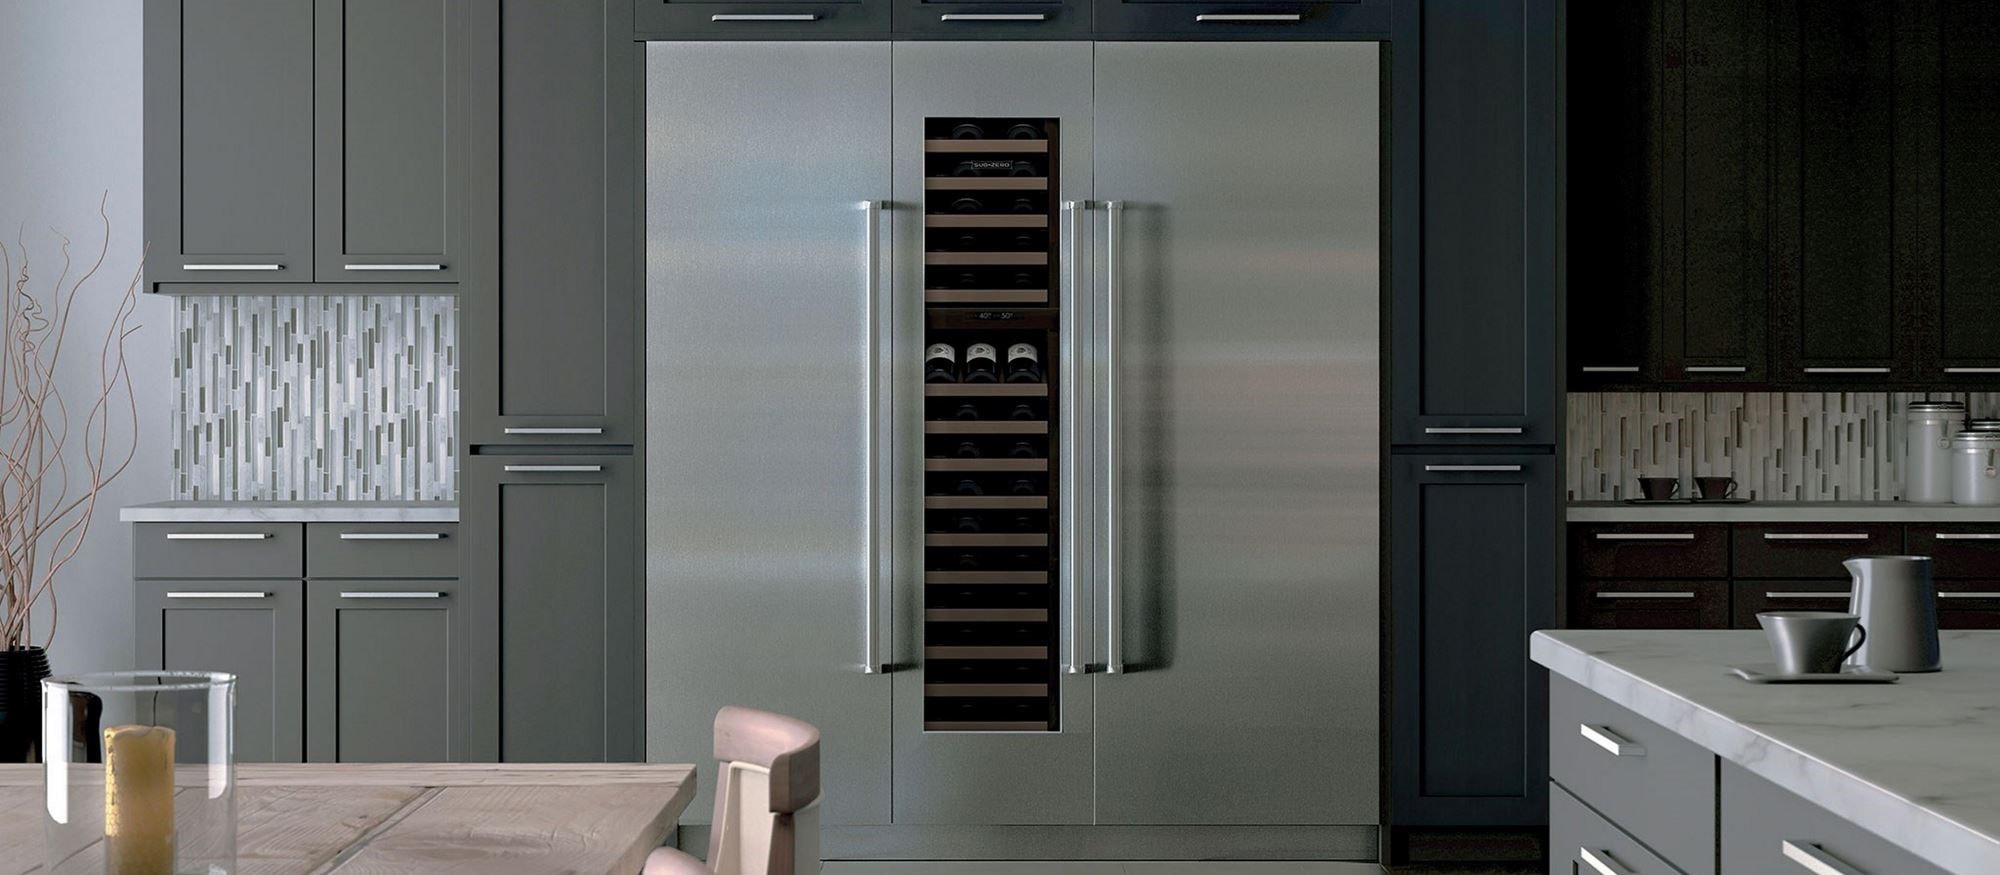 A Sub-Zero Designer Series Refrigerator Freezer and Wine Refrigerator